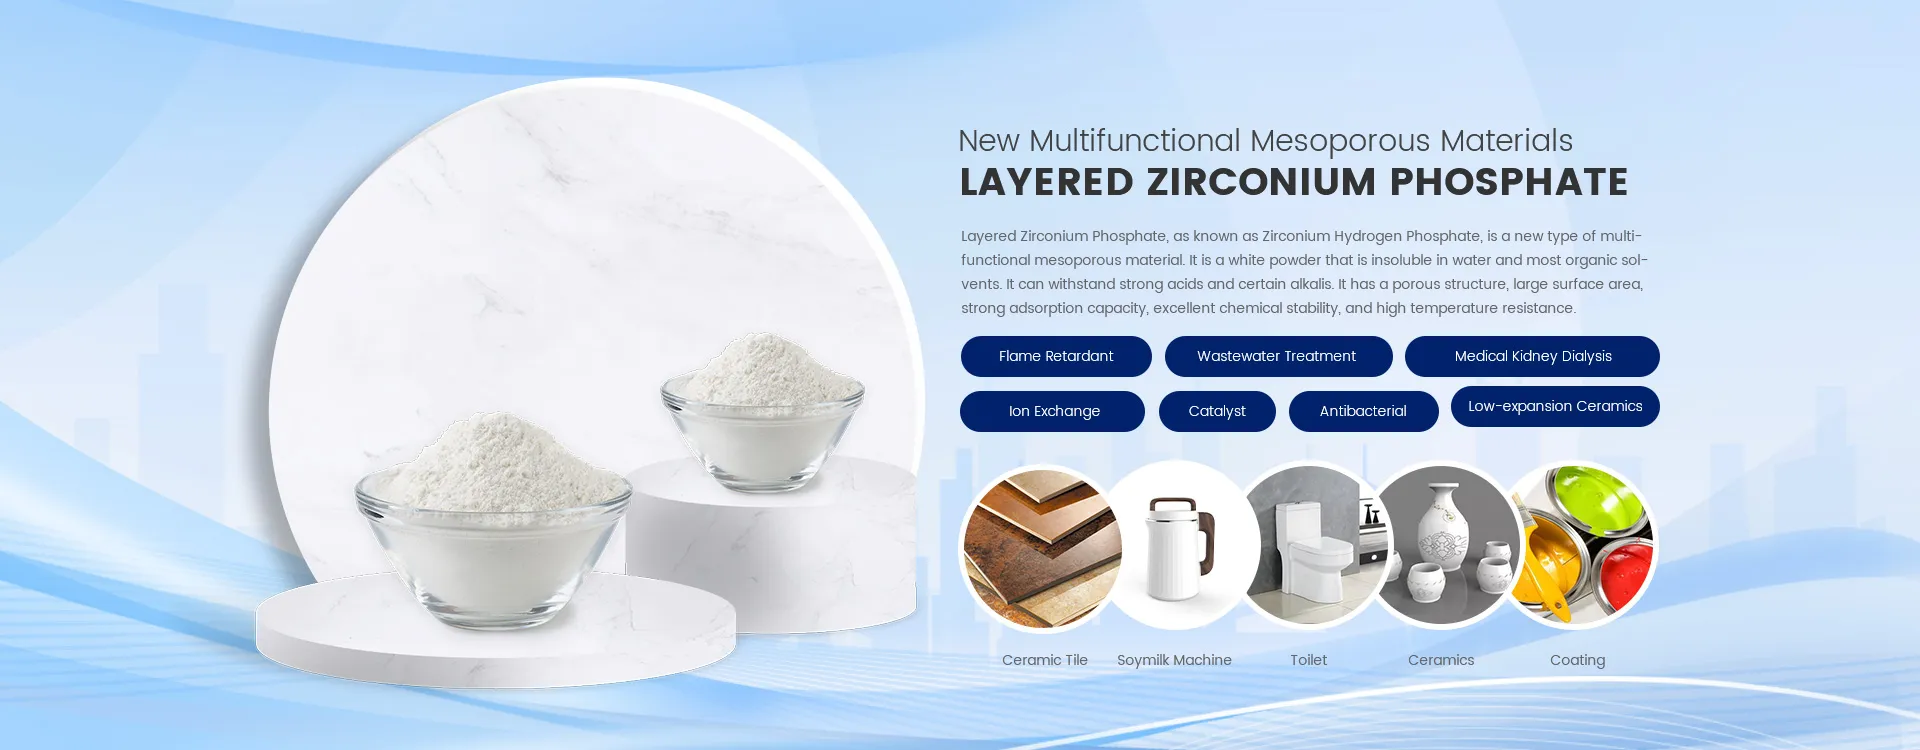 New Multifunctional Mesoporous Materials Layered Zirconium Phosphate